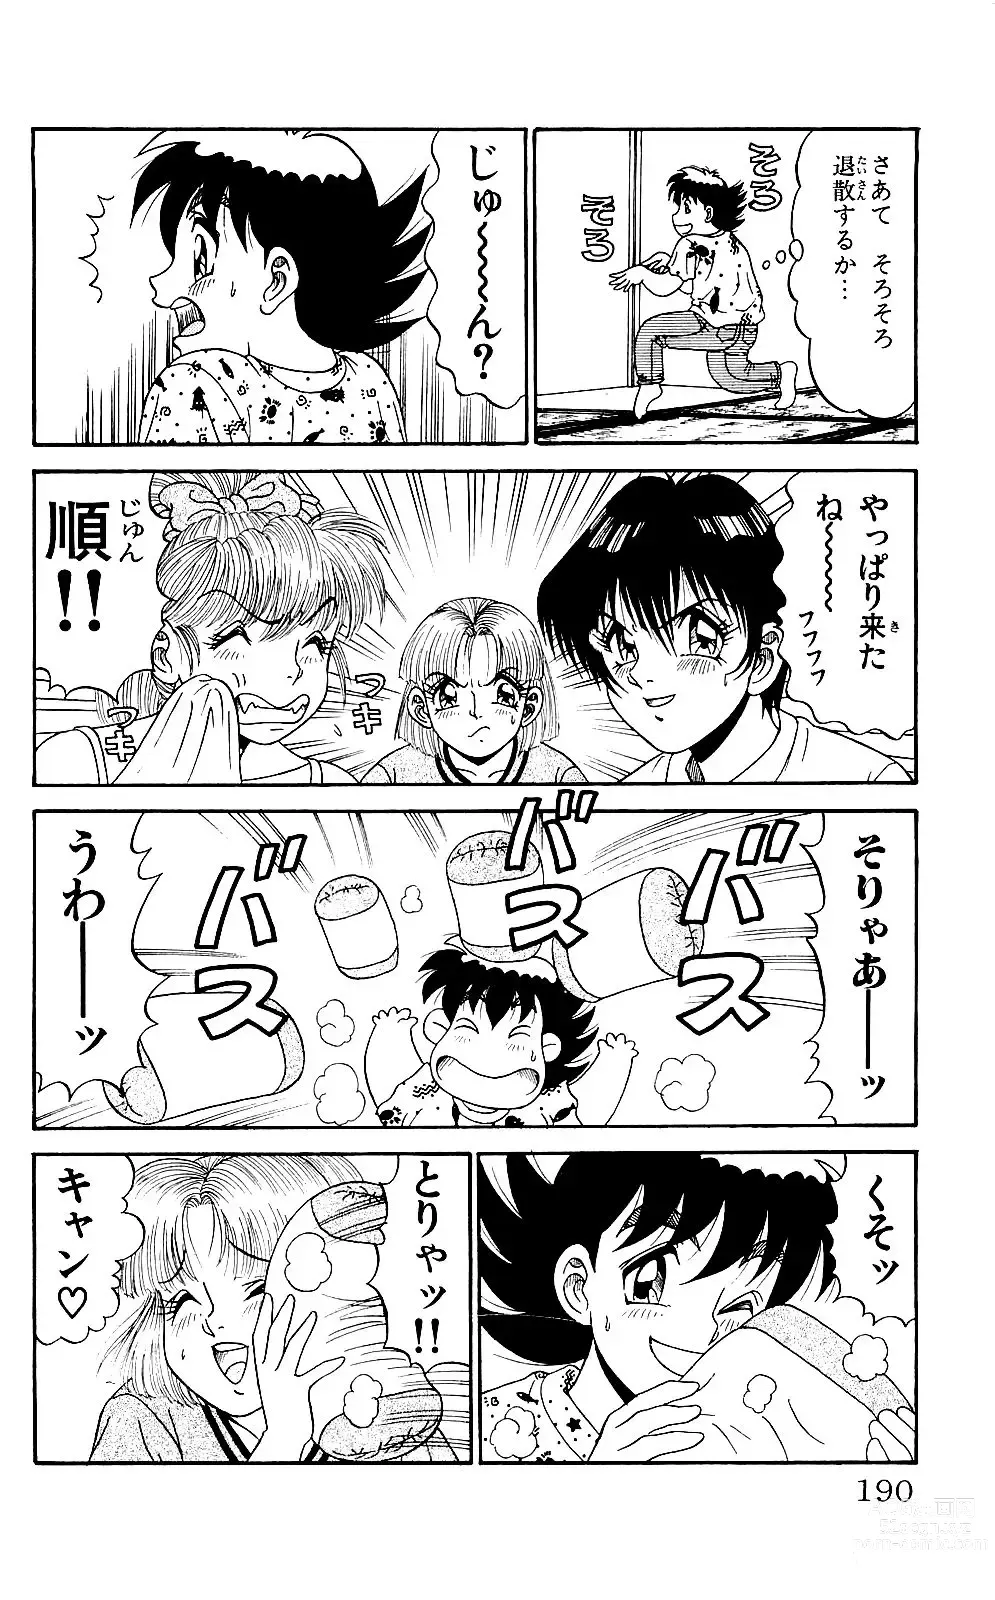 Page 188 of manga Orette Piyoritan 05